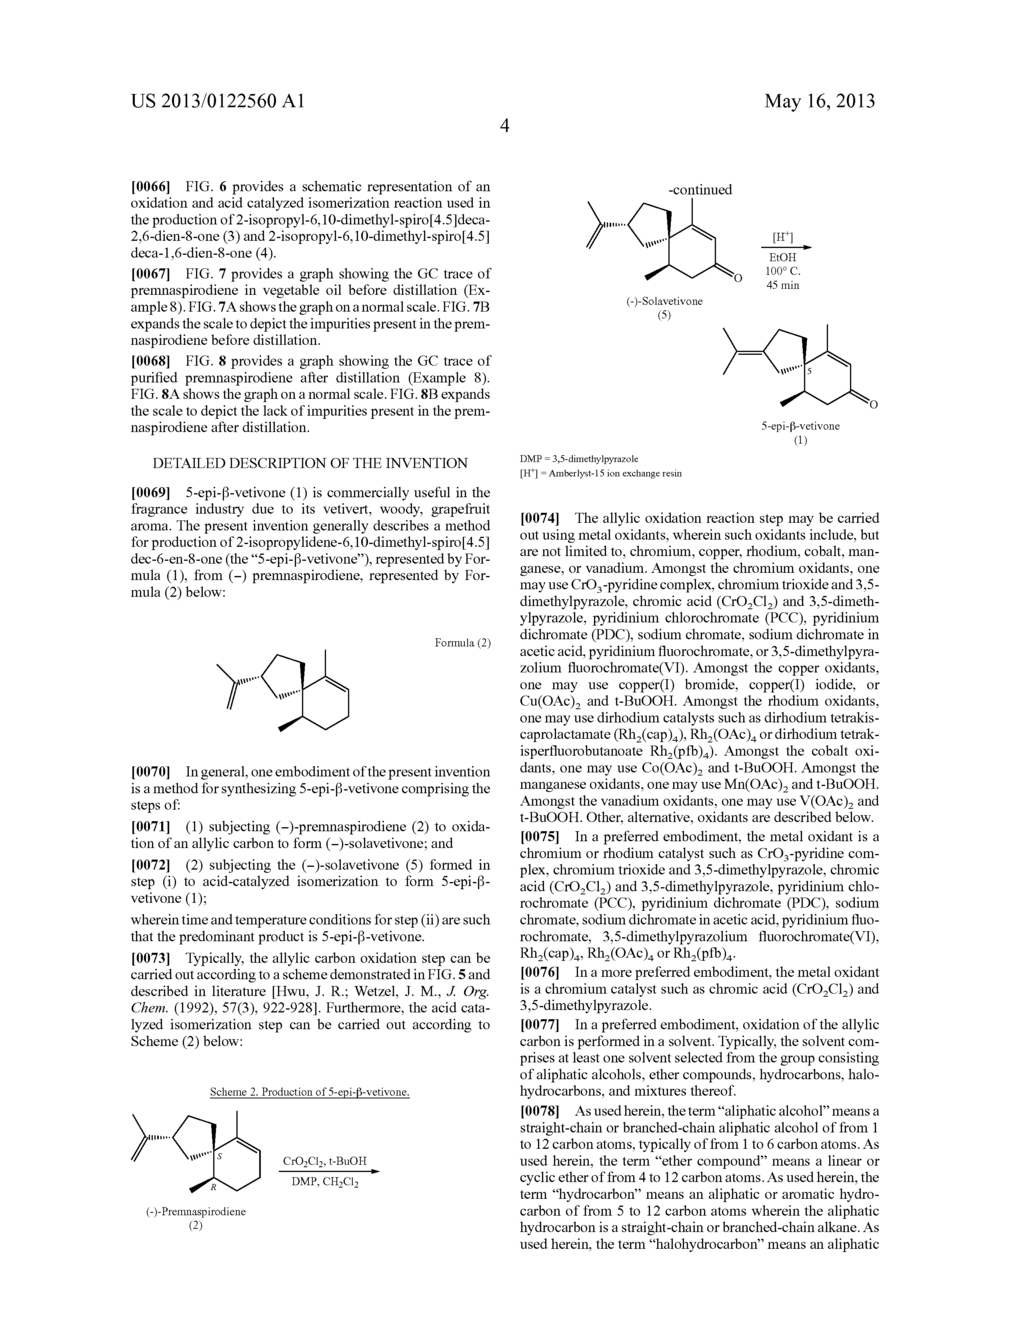 Novel fragrance and methods for production fo 5-epi- -vetivone,     2-isopropyl-6, 10-dimethyl-spiro[4.5]deca-2,6-dien-8-one, and     2-isopropyl-6, 10-dimethyl-spiro[4.5]deca-1, 6-dien-8-one - diagram, schematic, and image 11